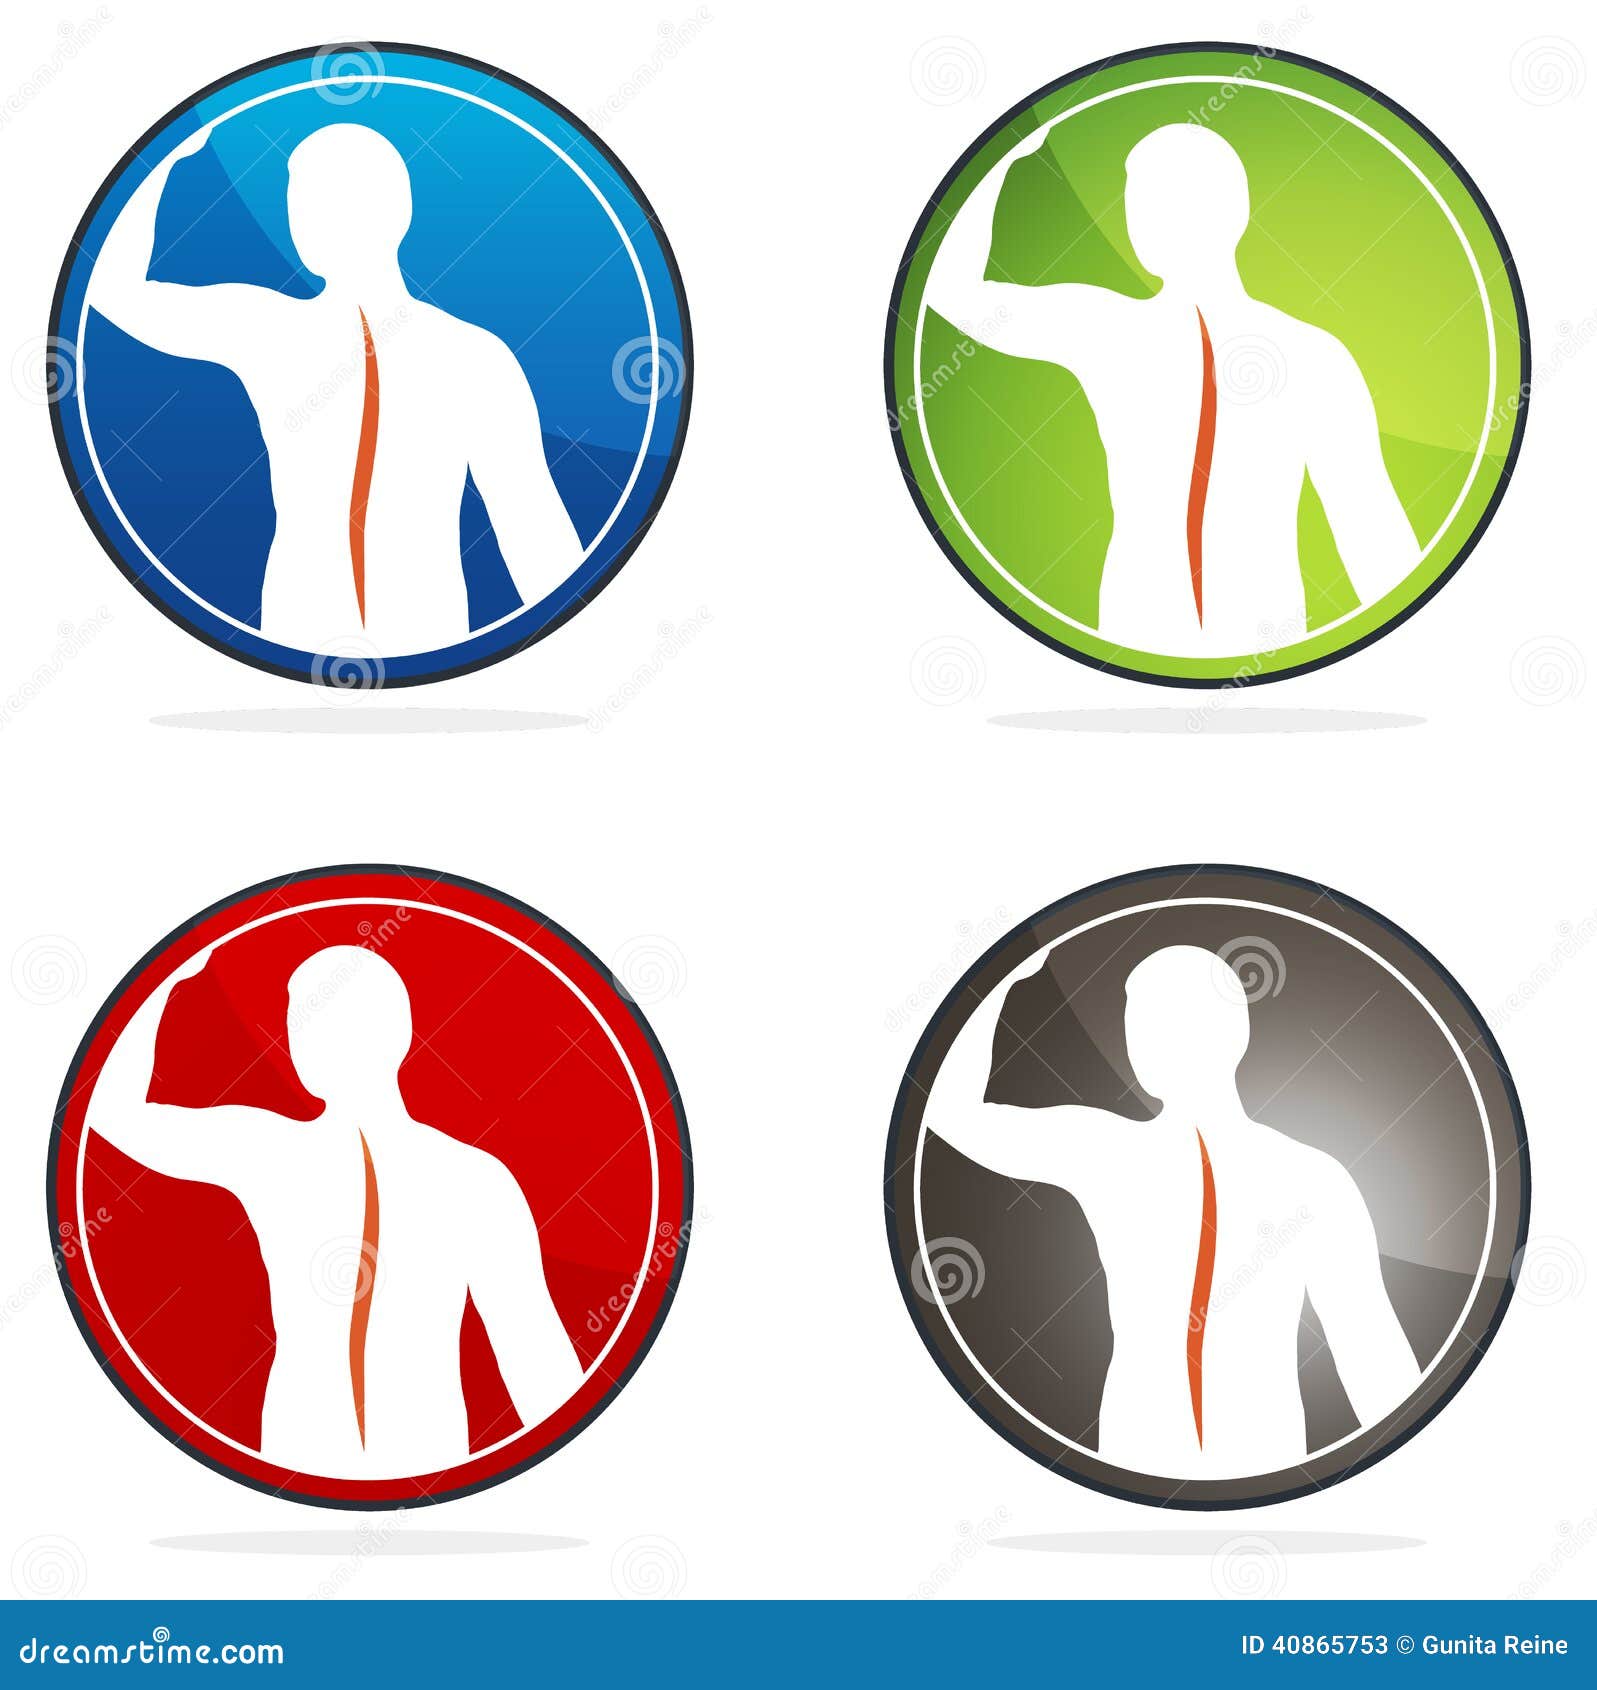 human vertebral column health icons